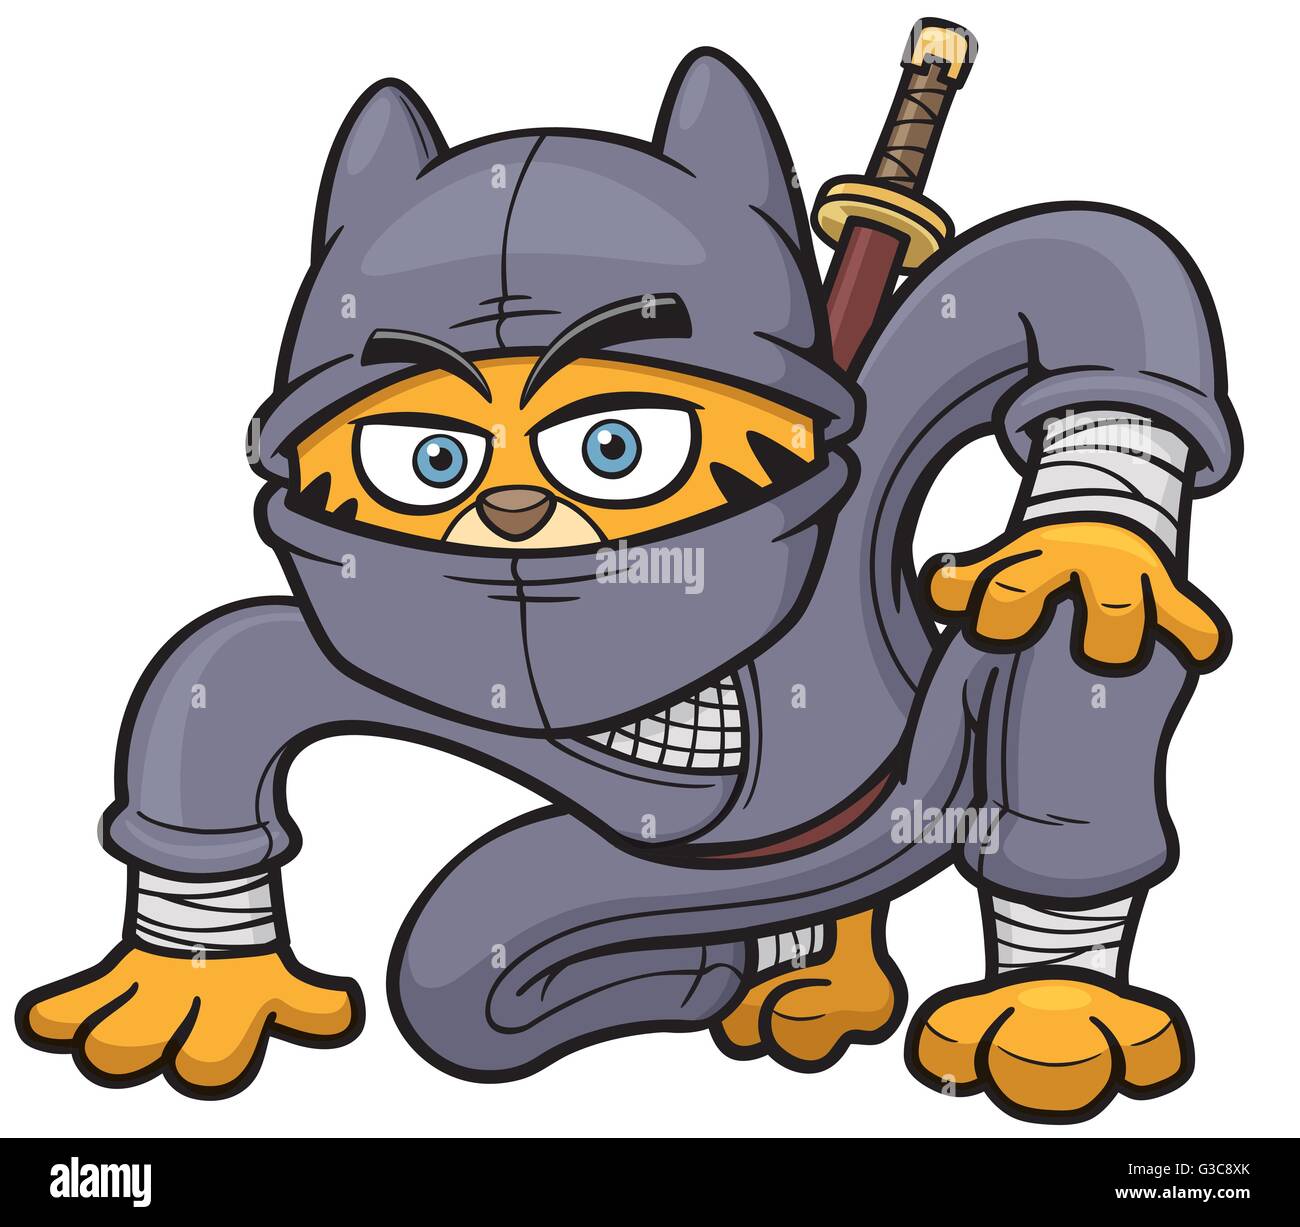 Placa Gato Ninja